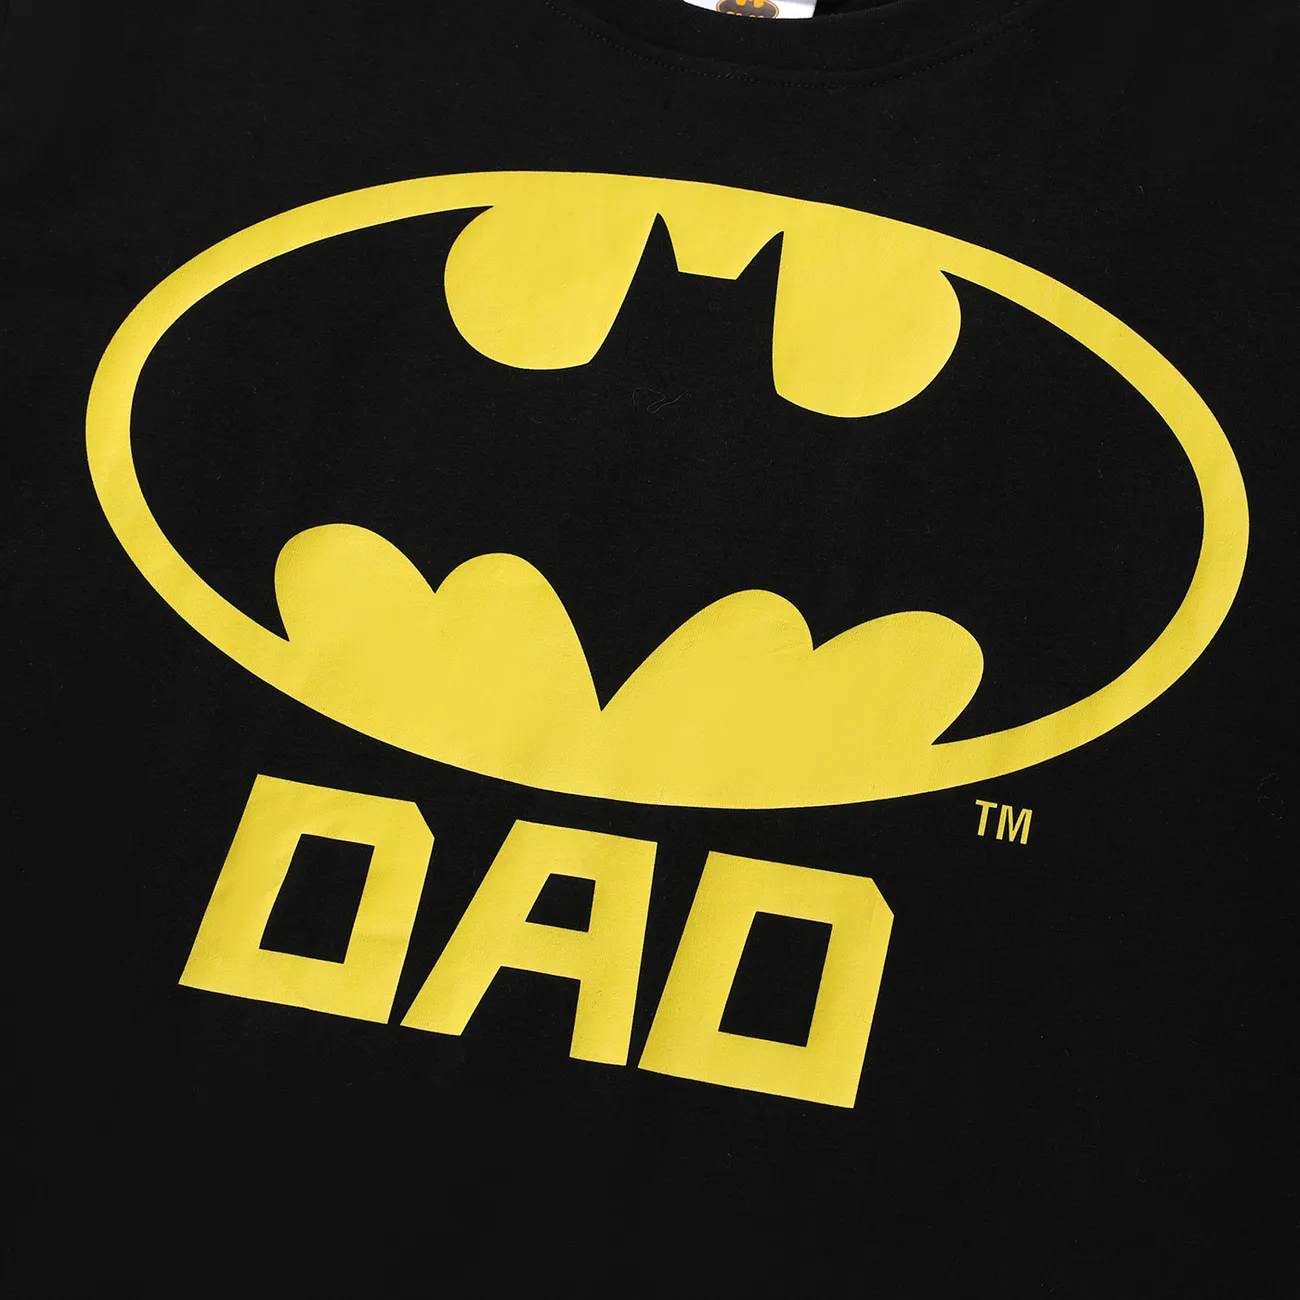 Batman Family Matching Cotton Short-sleeve Graphic Black Tee Black big image 1